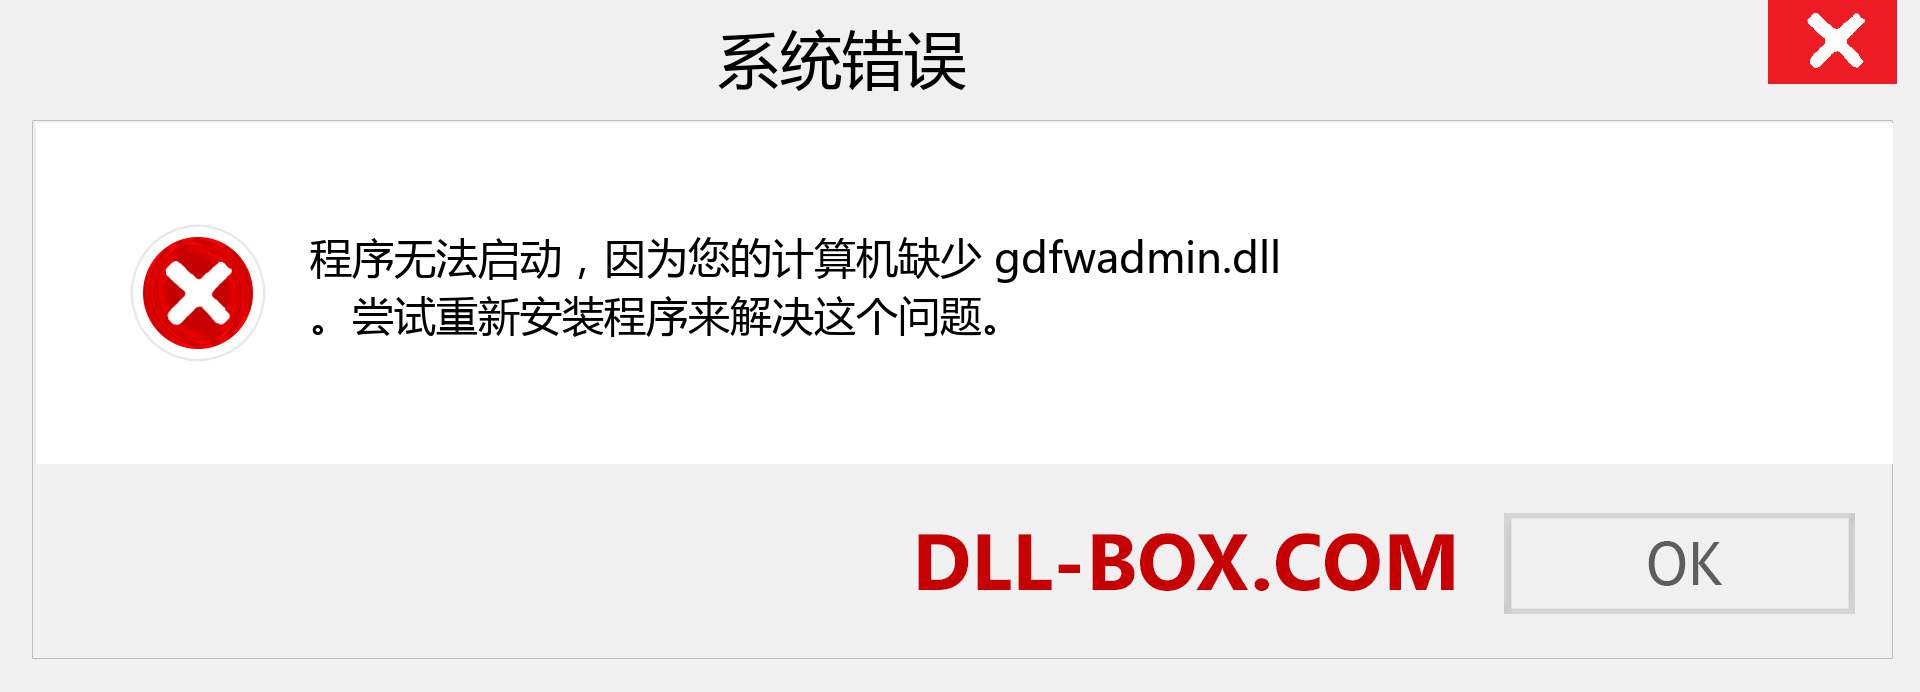 gdfwadmin.dll 文件丢失？。 适用于 Windows 7、8、10 的下载 - 修复 Windows、照片、图像上的 gdfwadmin dll 丢失错误